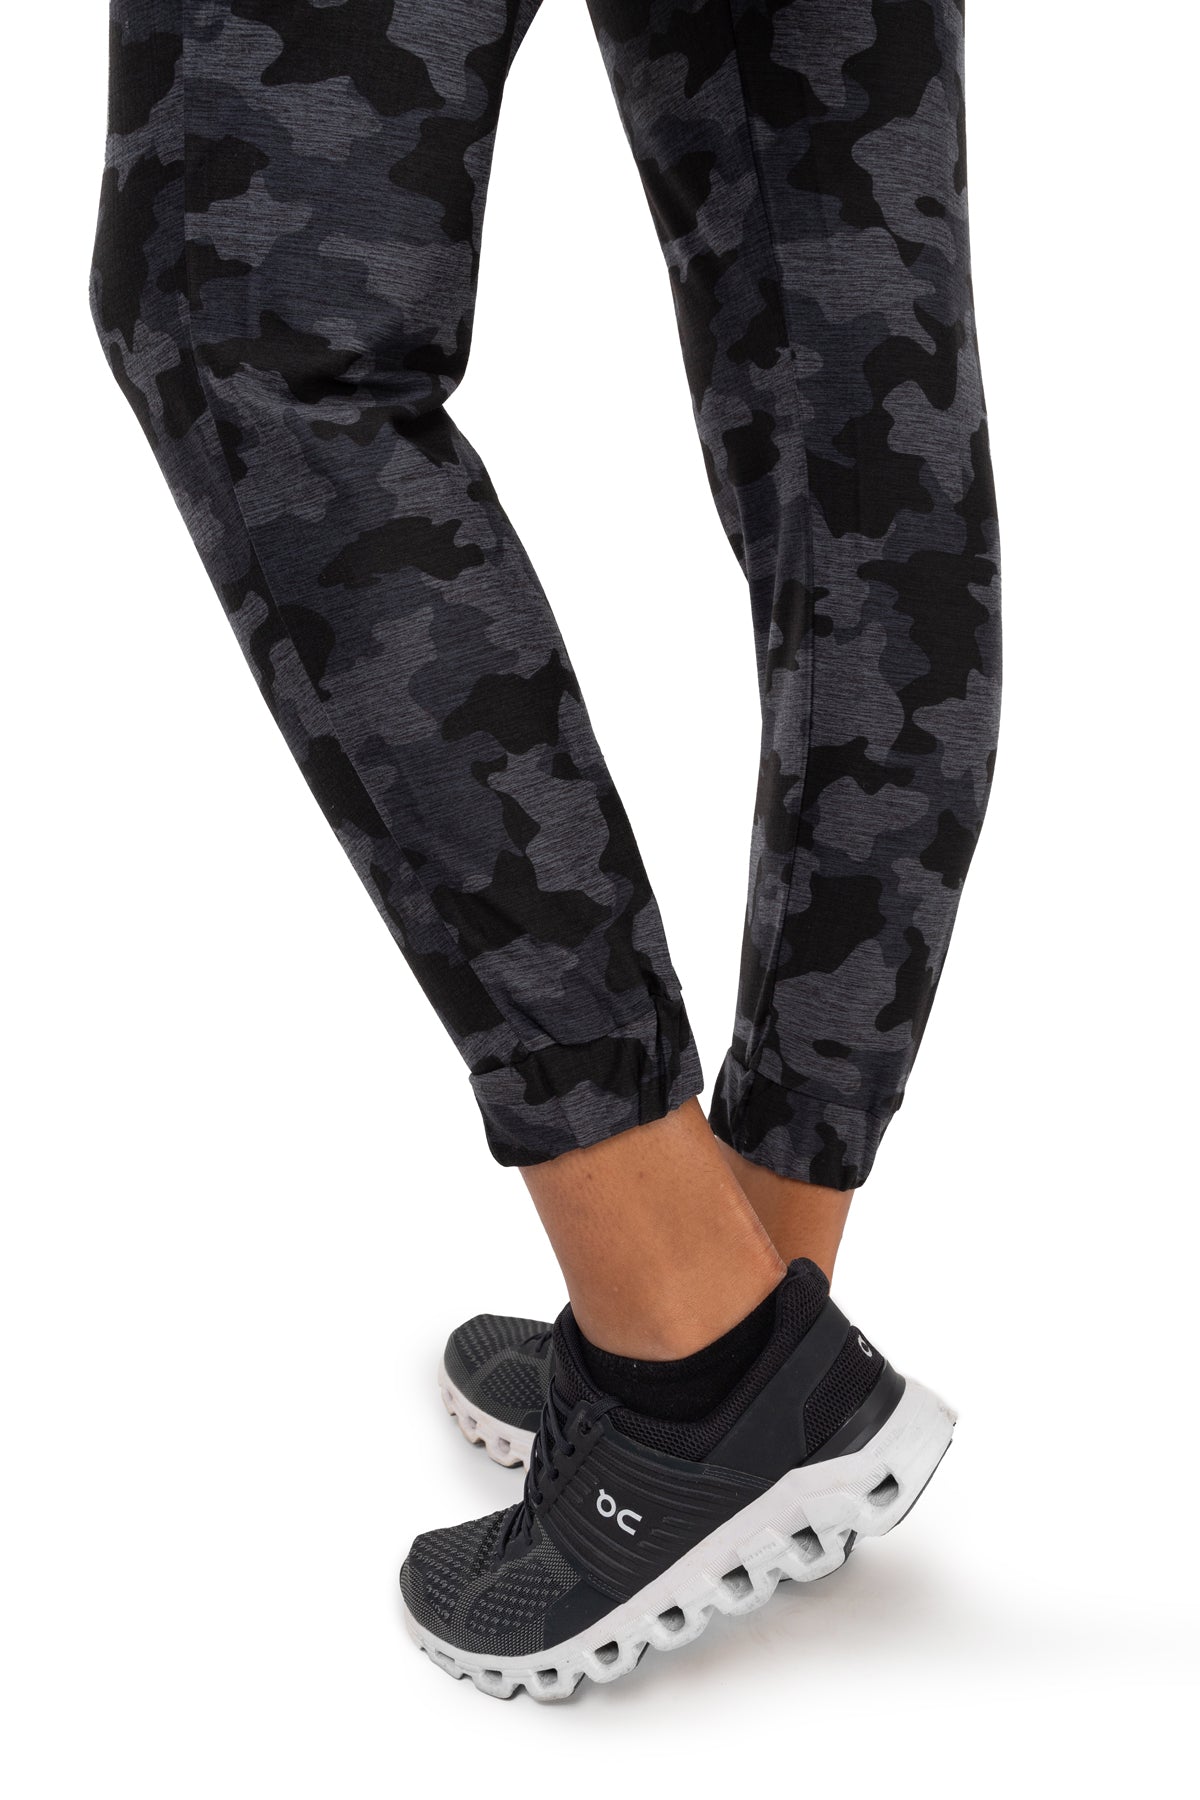 KSCD Women's Joggers Sweatpants High Waist Yoga Pants with Pocket Tummy  Control Casual Lounge Pants Camo Workout Leggings Black X-Small